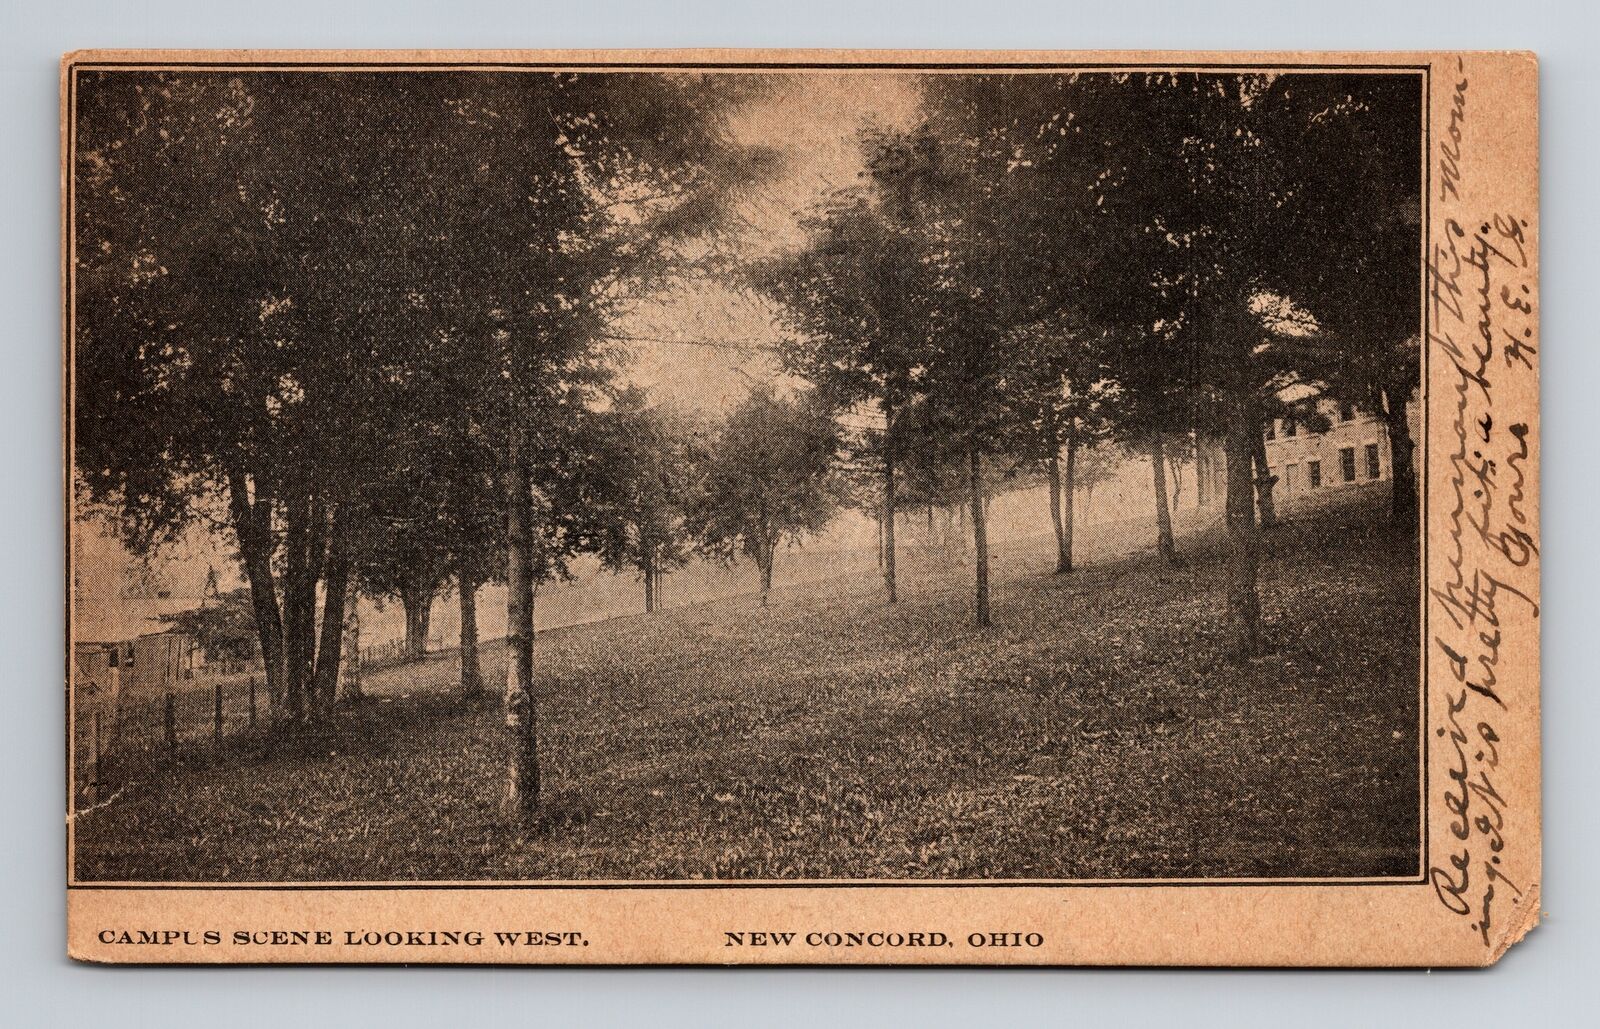 New Concord, OH-Ohio, Muskingum Campus Looking West, c1907, Vintage Postcard